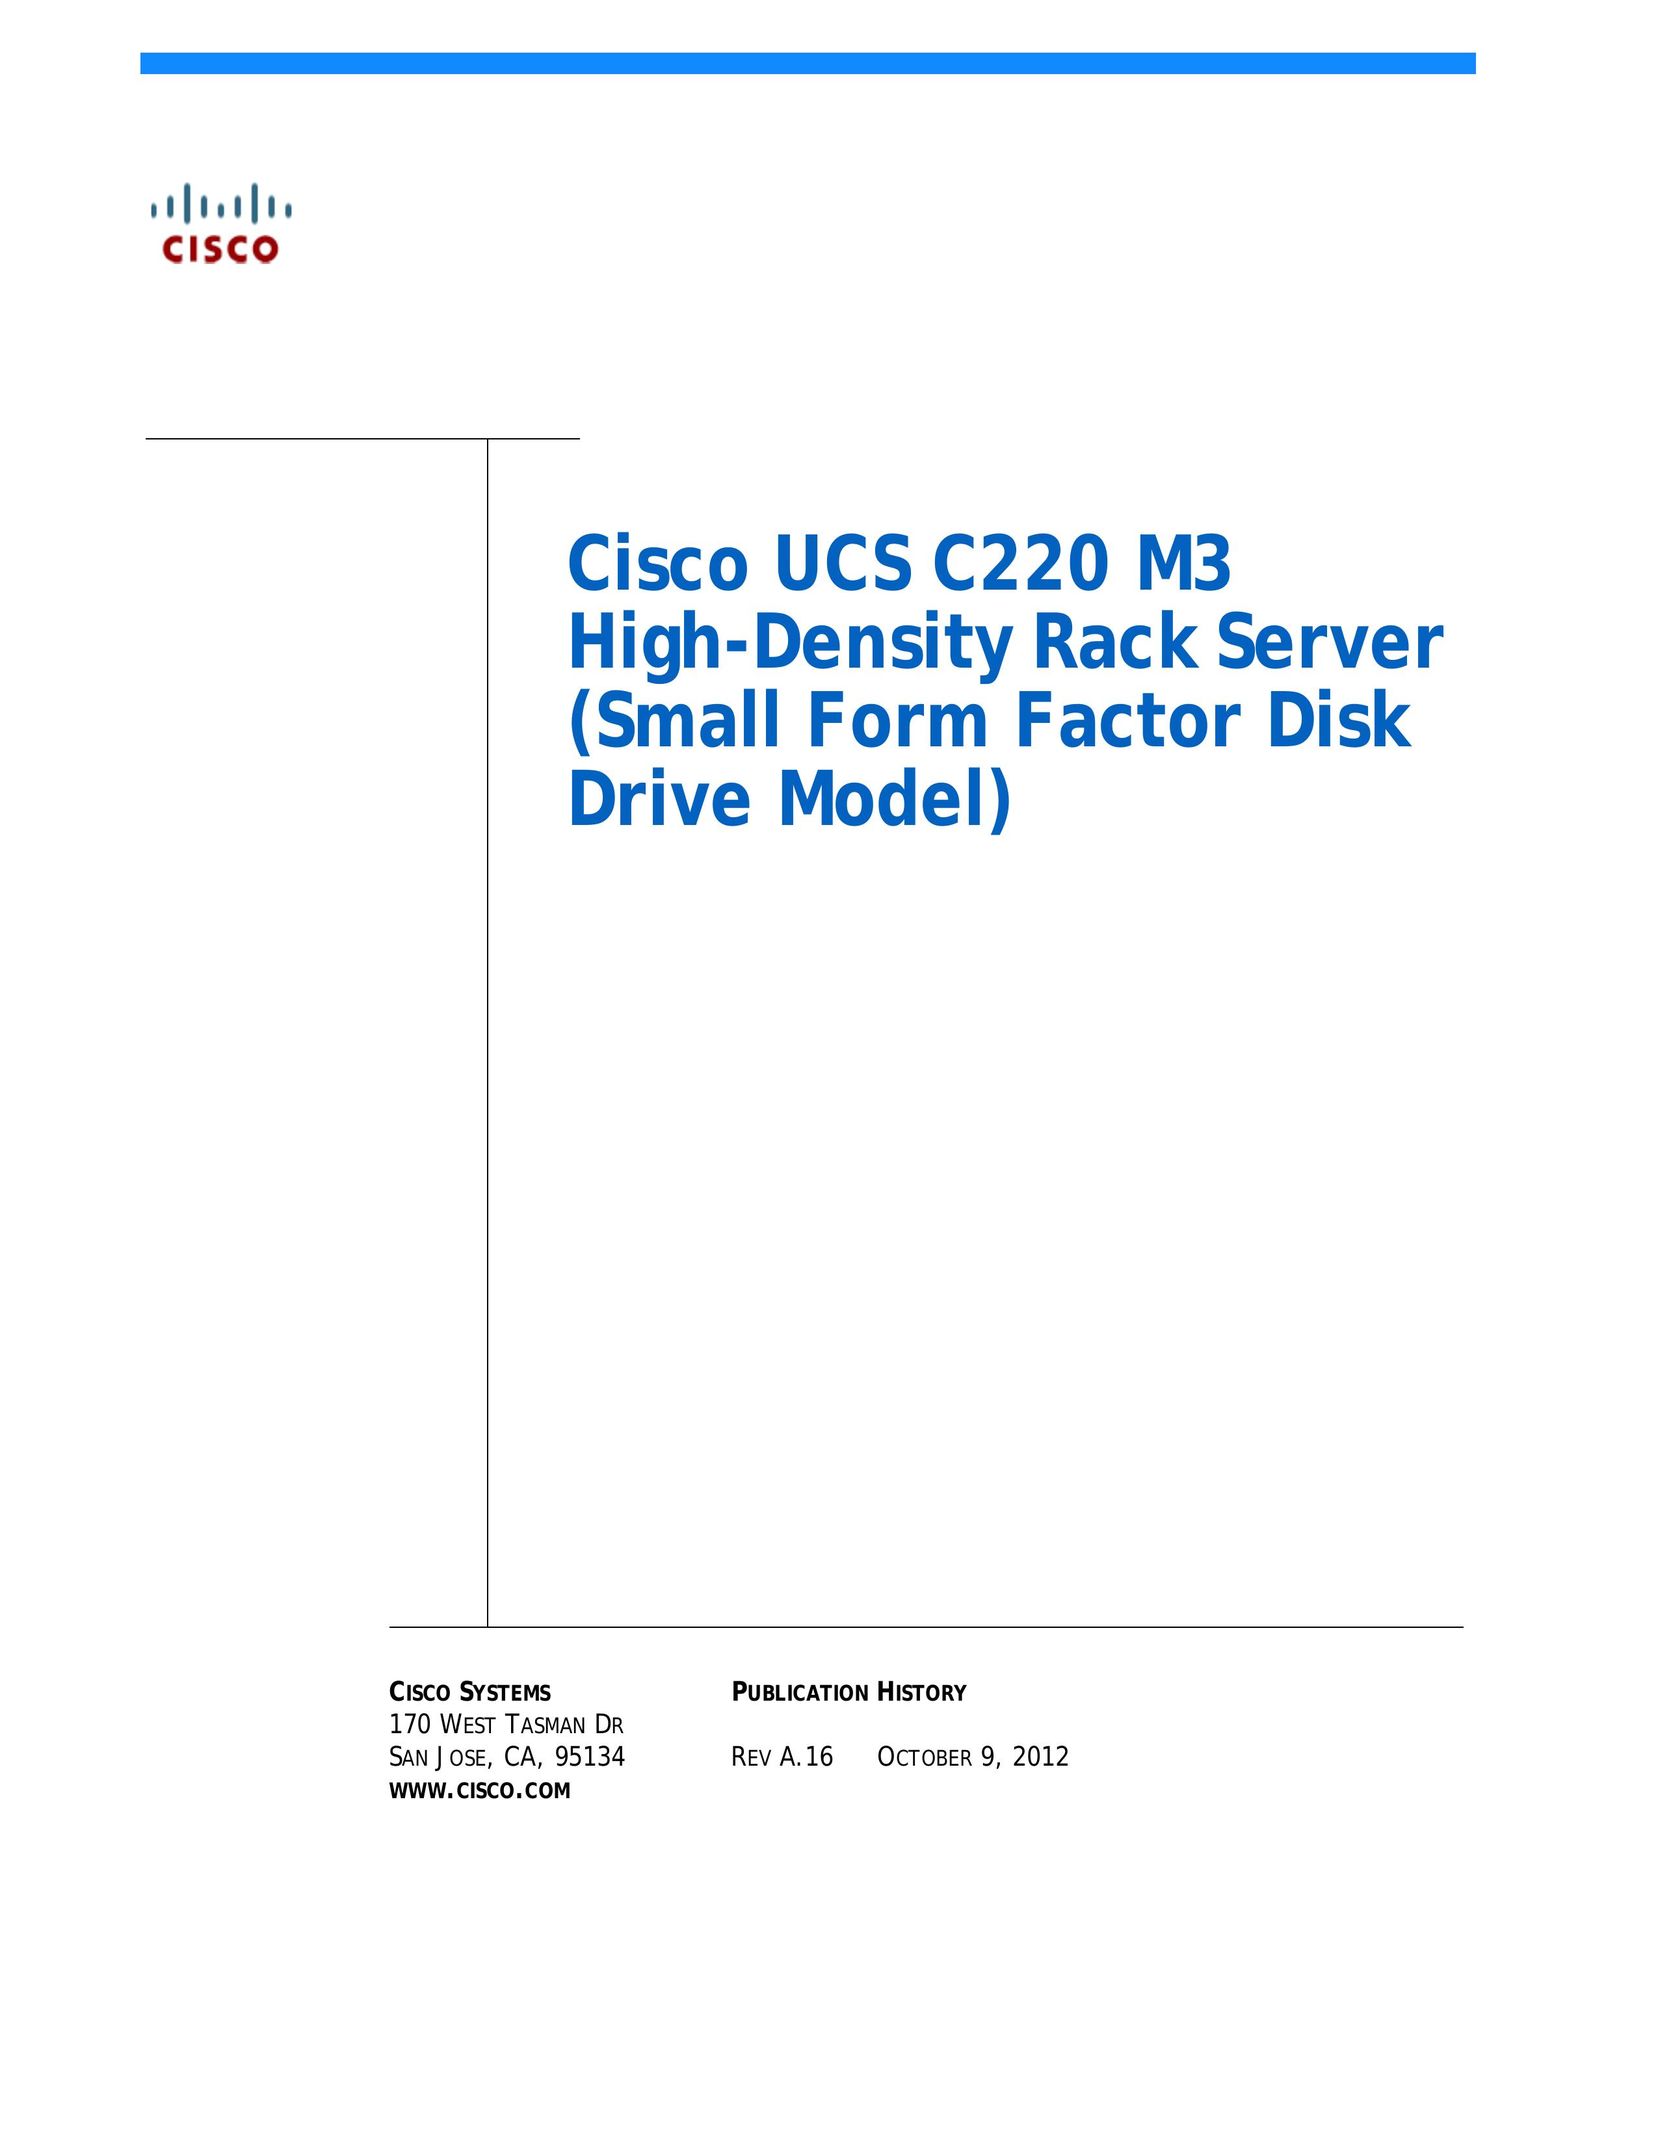 Cisco Systems UCS C220 M3 Server User Manual